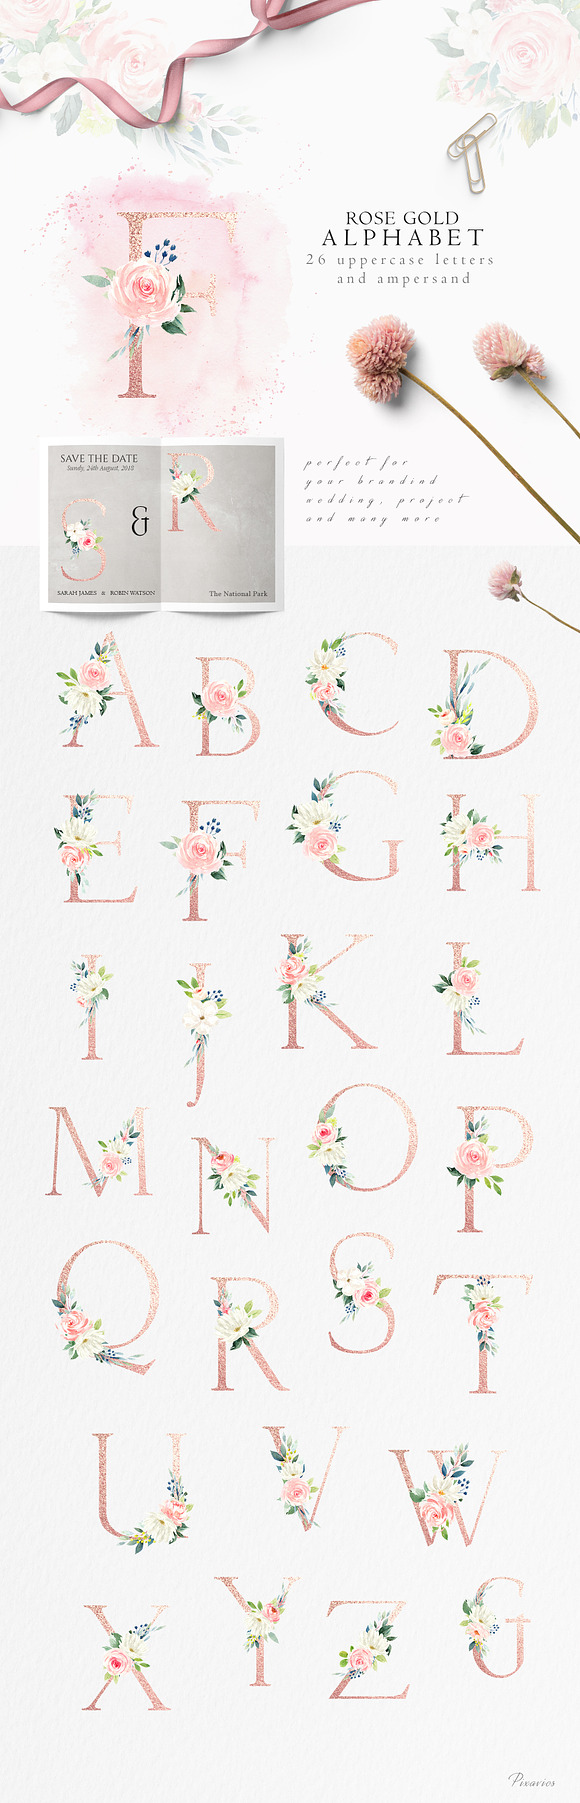 Floral Alphabet Design Set in Illustrations - product preview 5